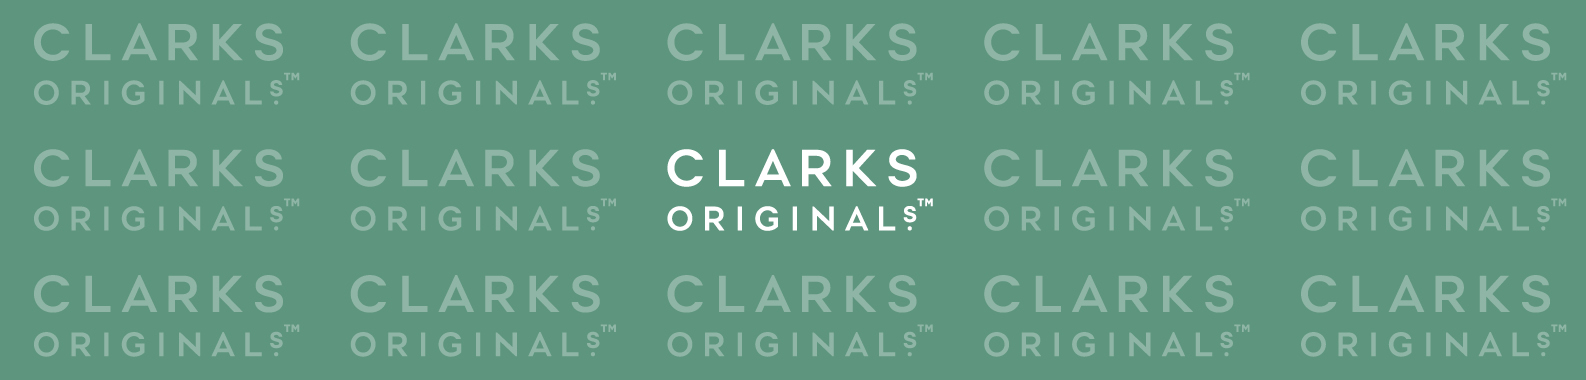 Clarks brand header image